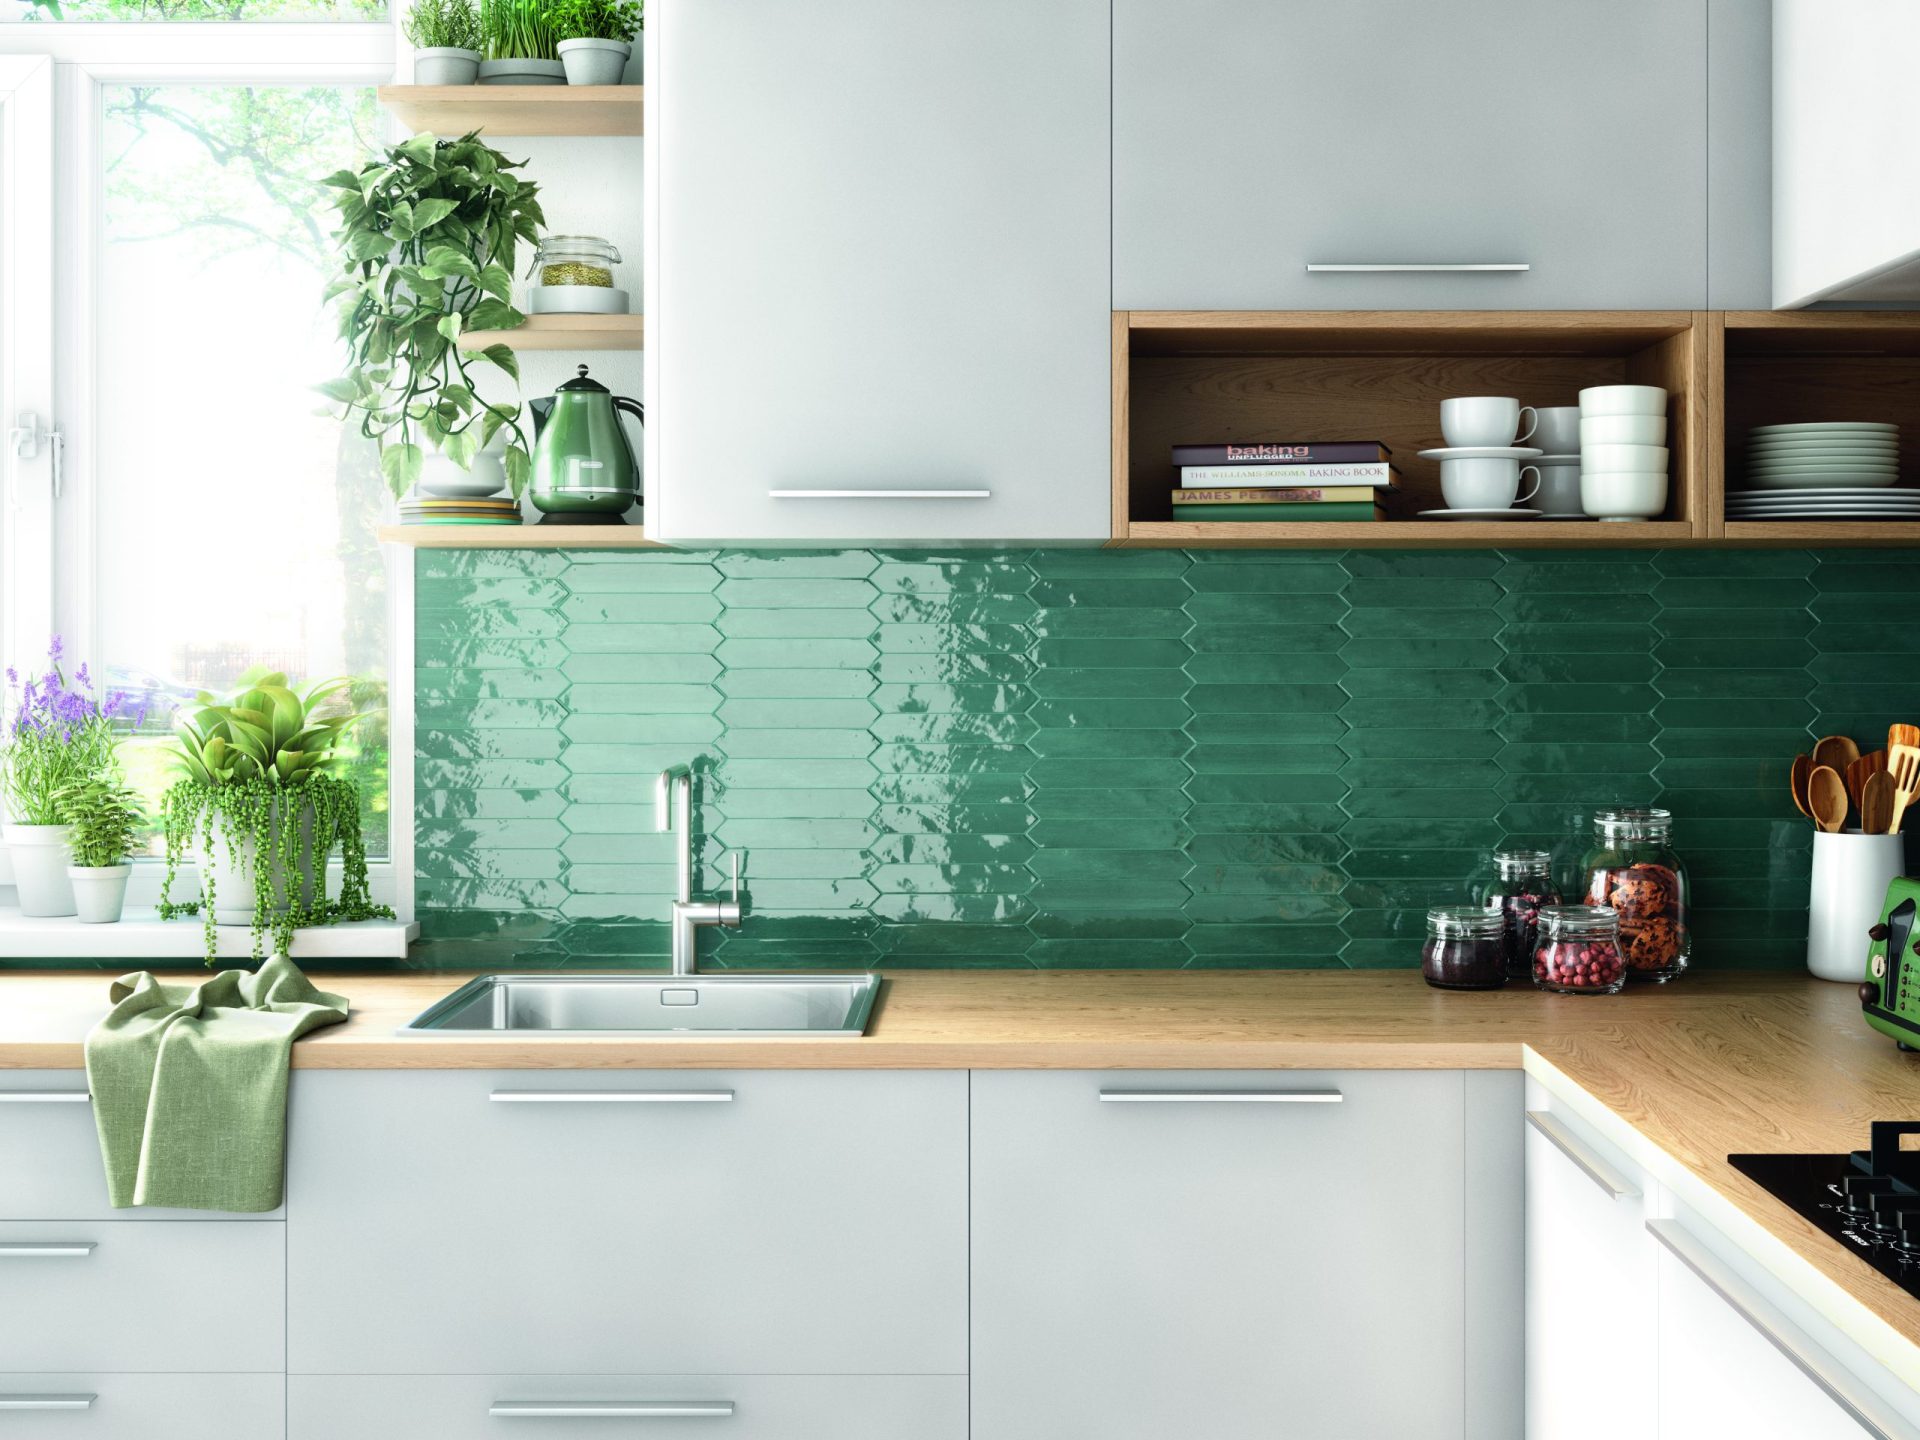 Switch ceramic tile in Victorian Green on a kitchen backsplash.